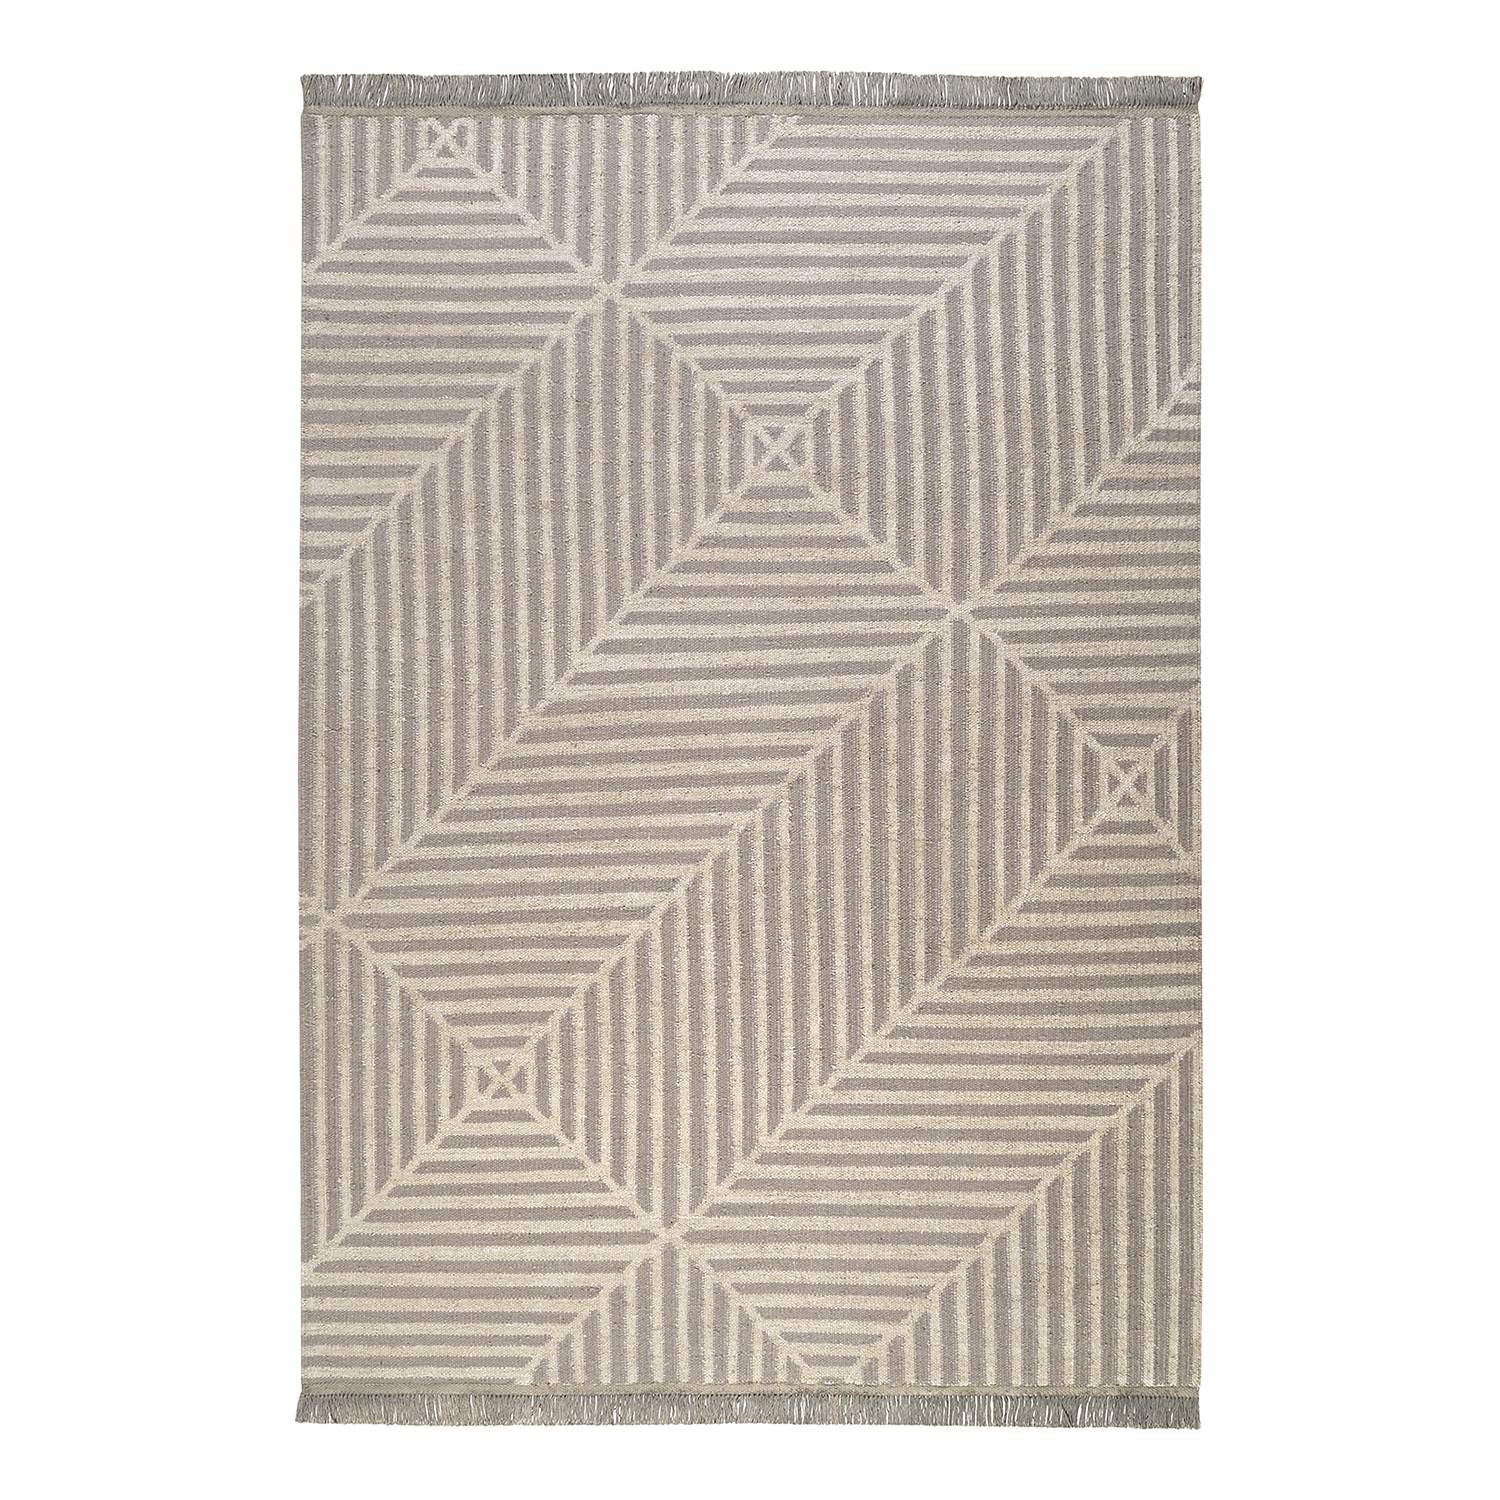 Teppich Irregular Fields (handgewebt) - Mischgewebe - Grau / Creme - 130 x 190 cm, carpets&co